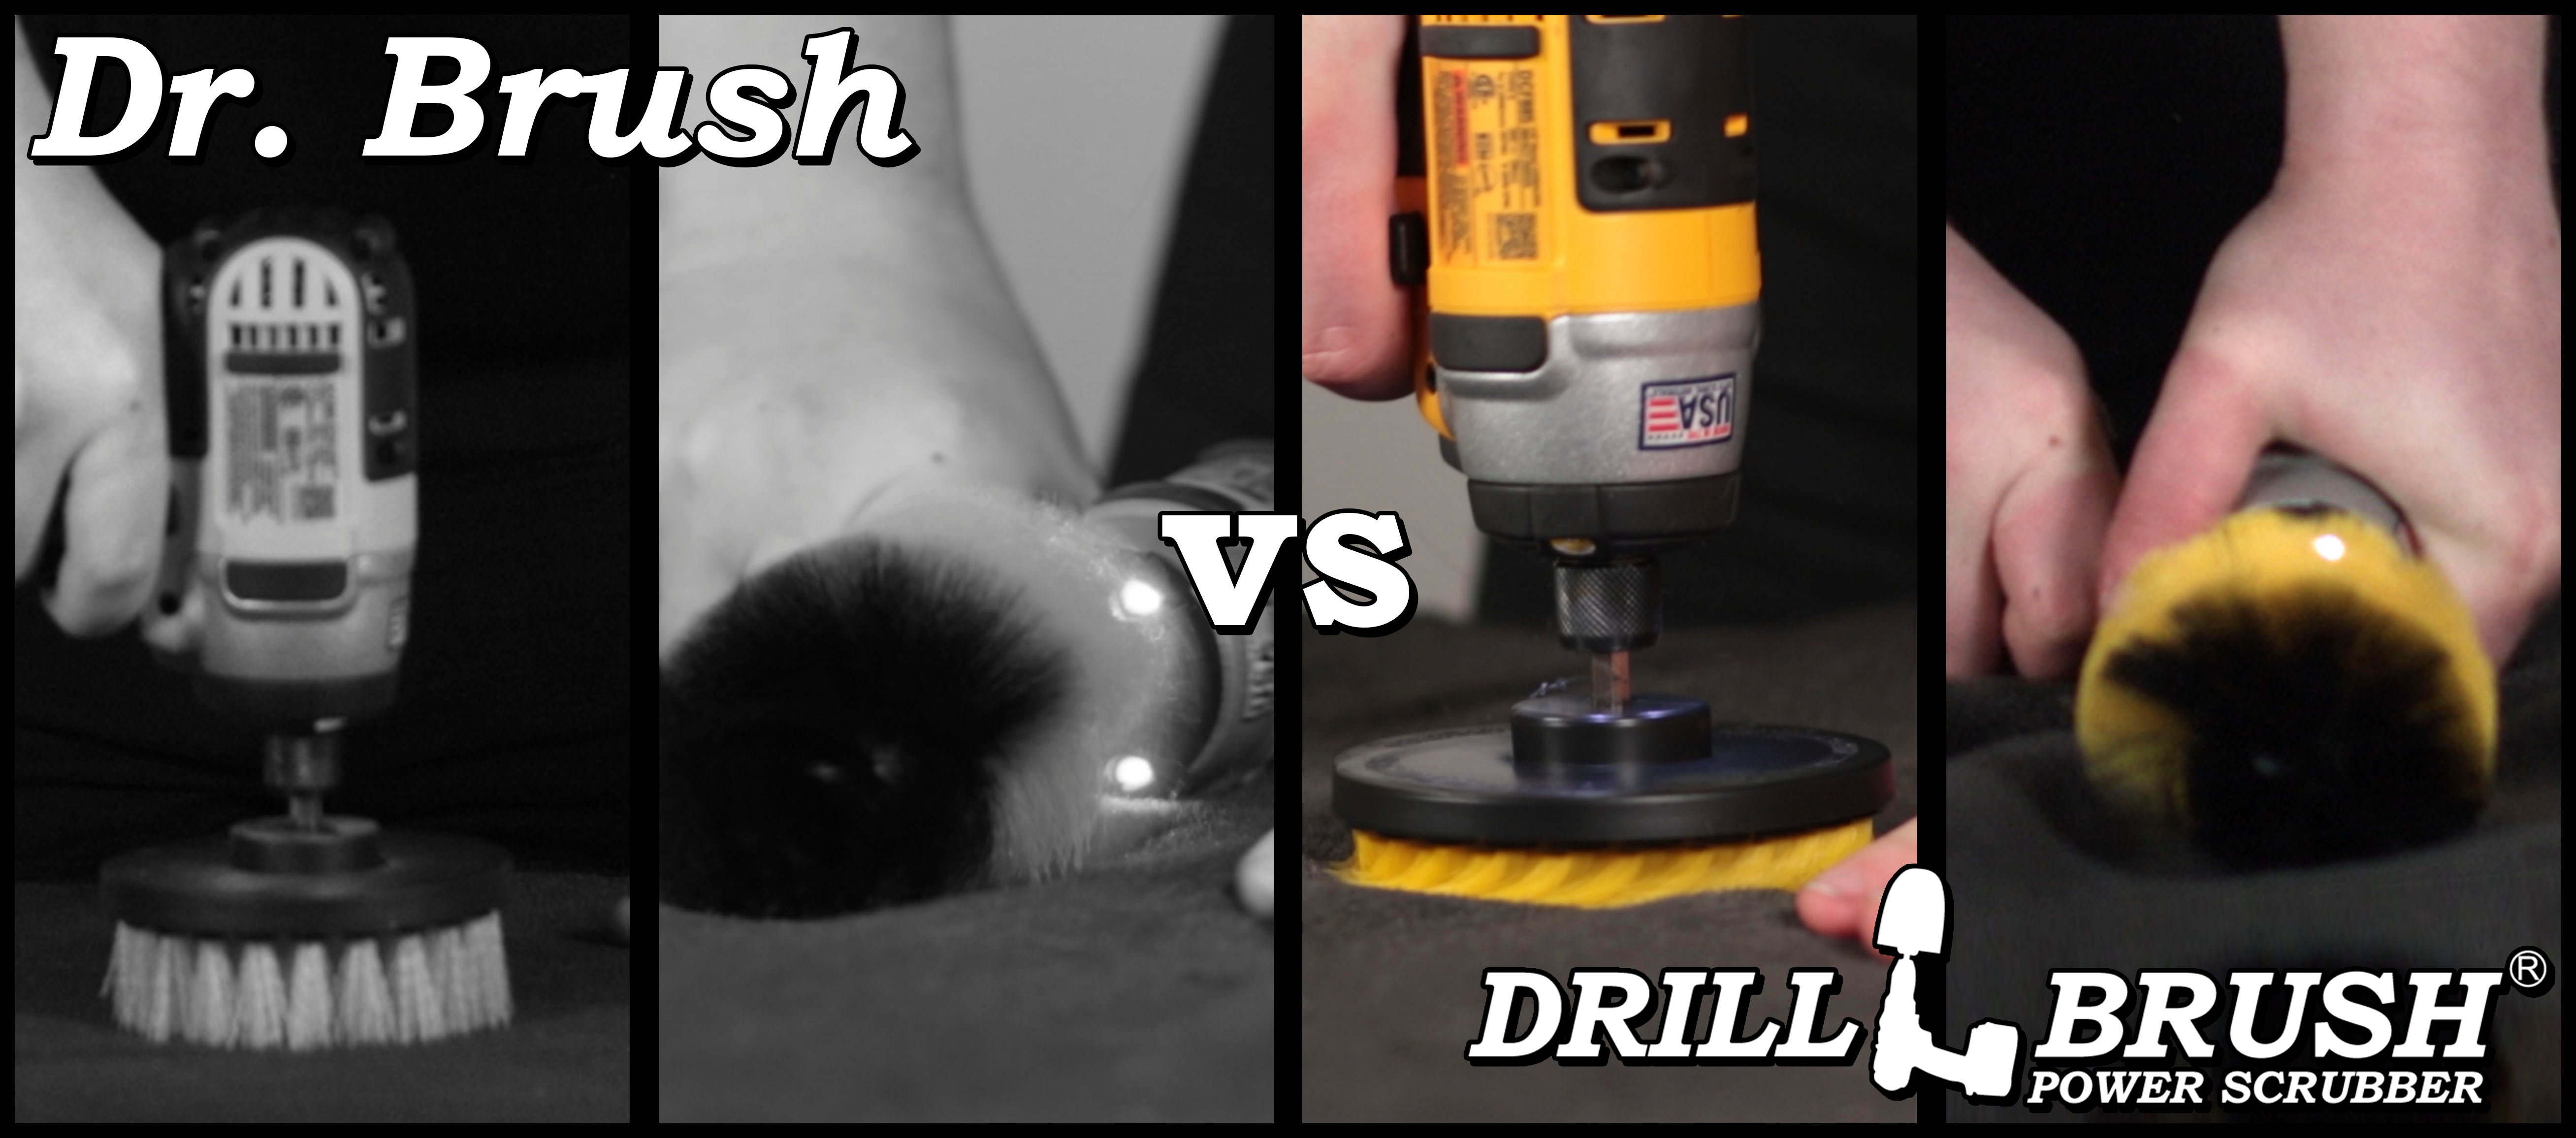 Dr. Brush vs. Drillbrush: Which is the Superior Scrub Brush?